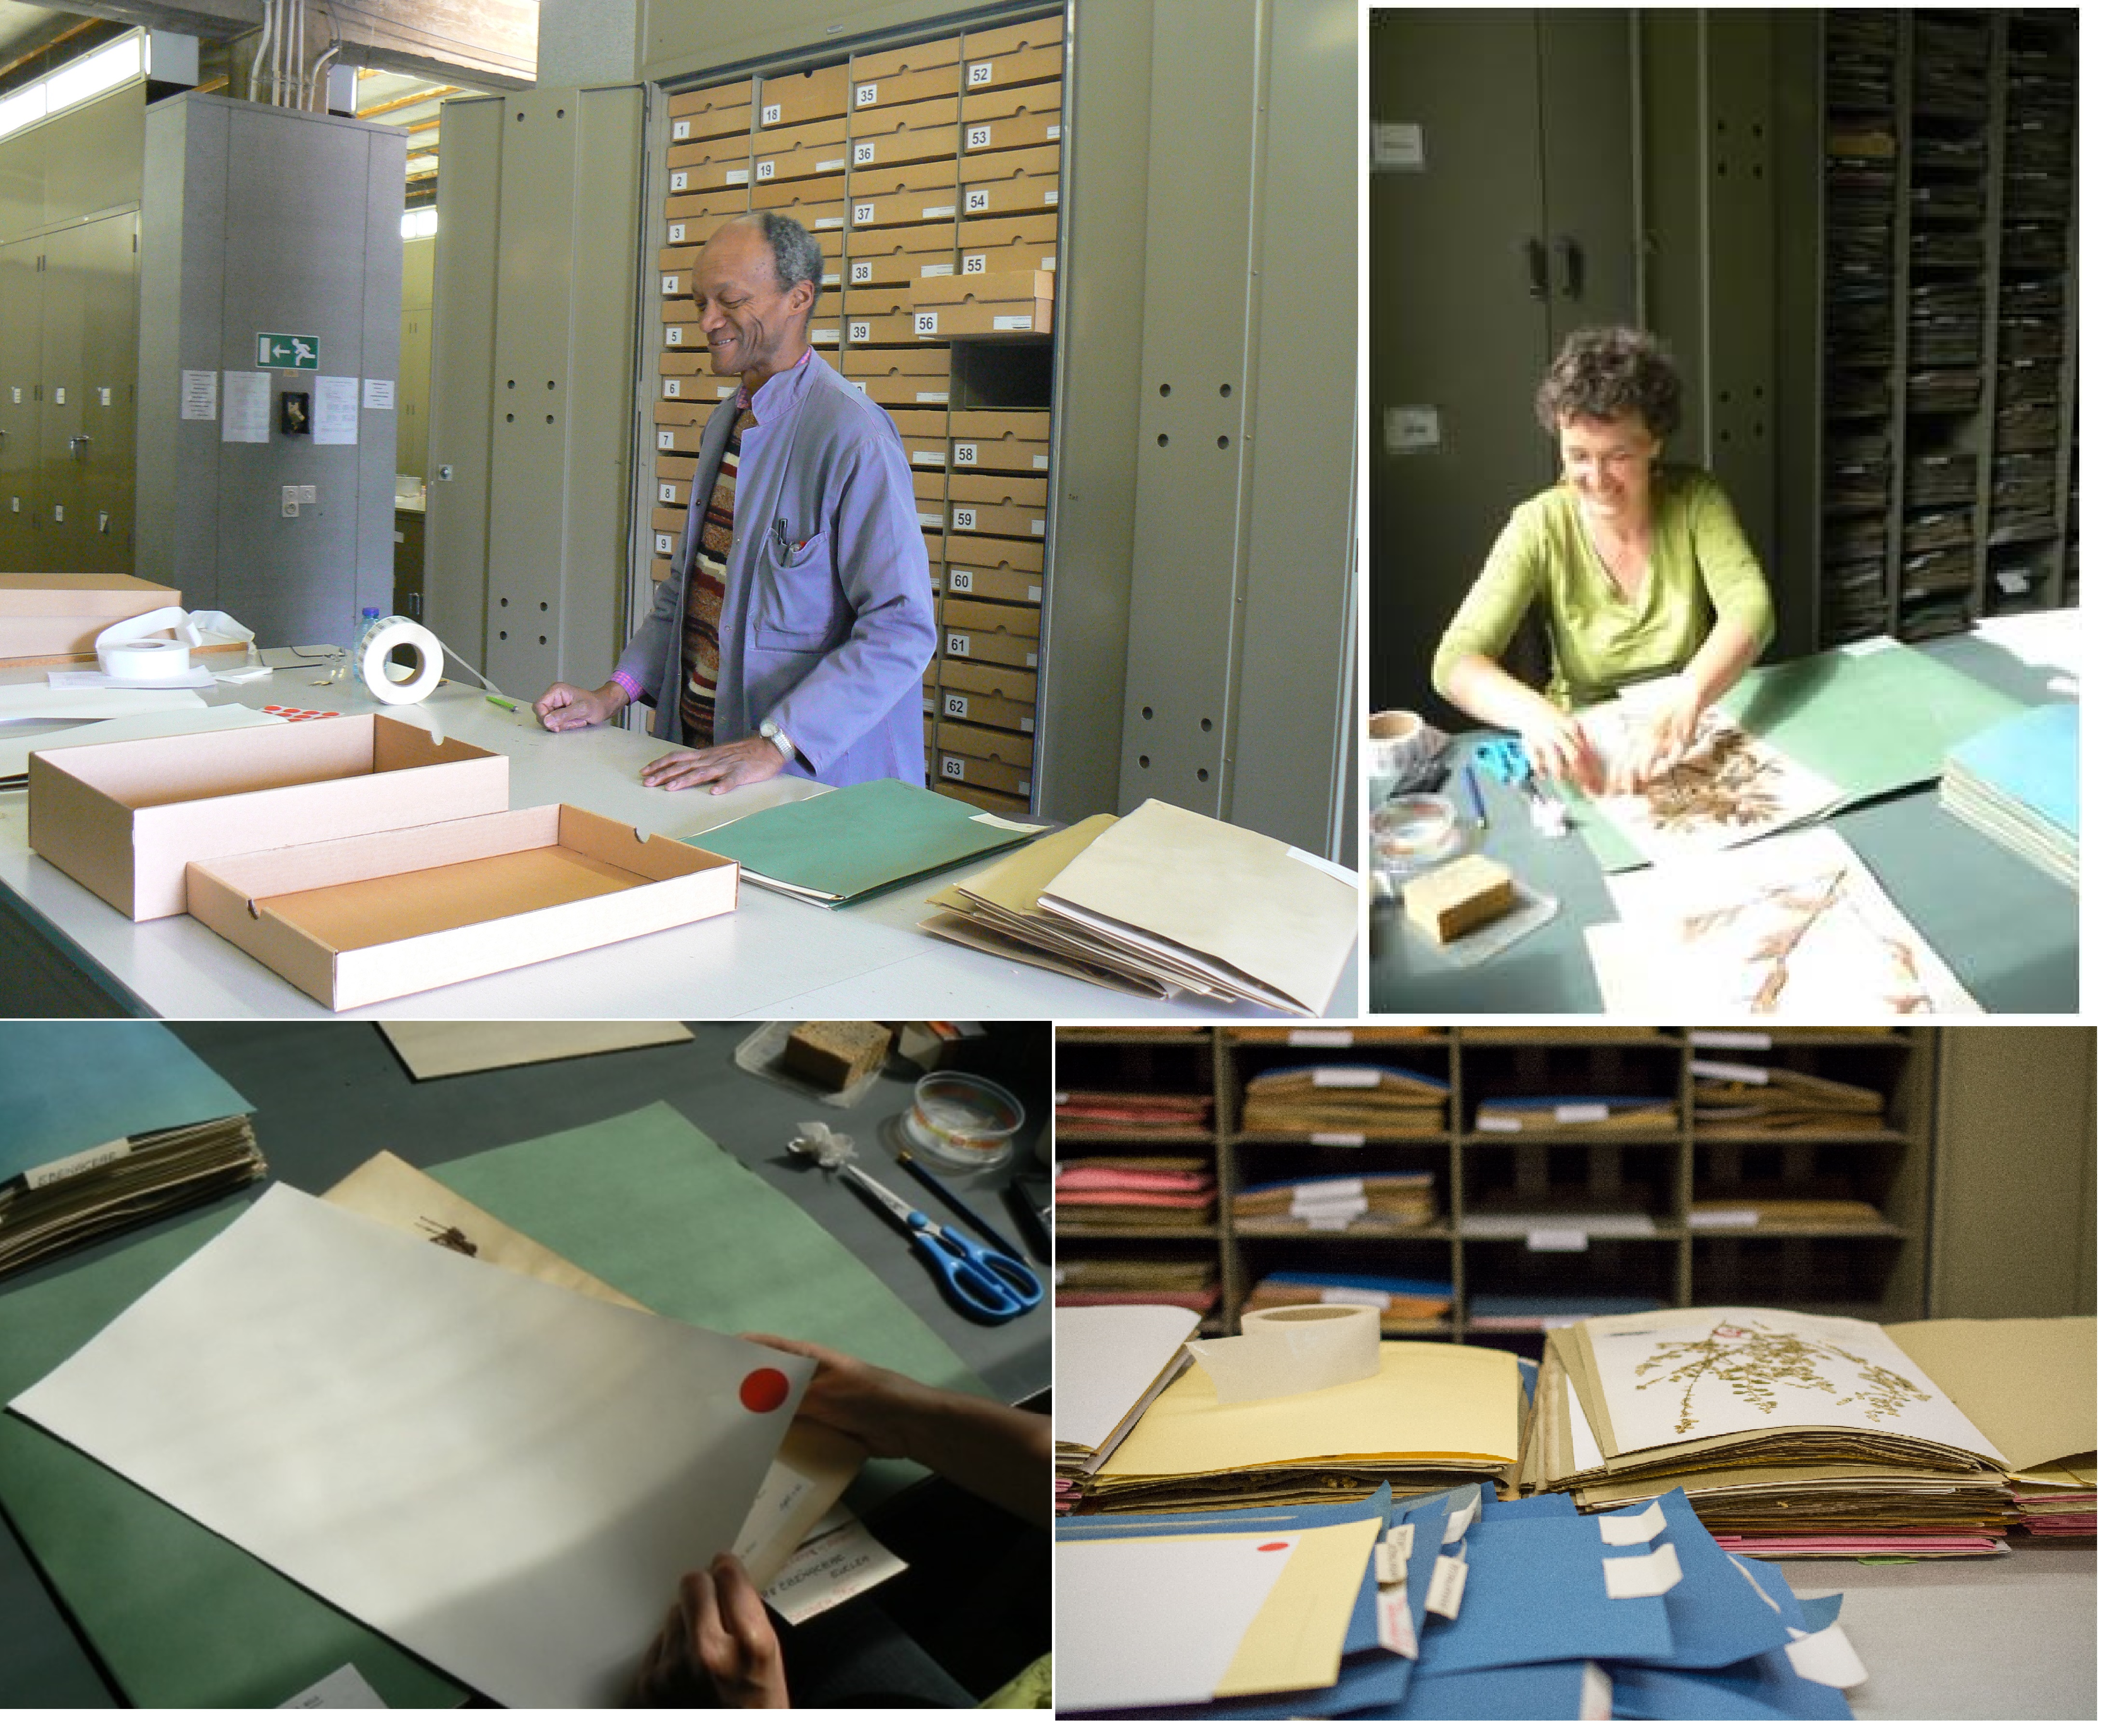 pre-digitisation curation of the specimens